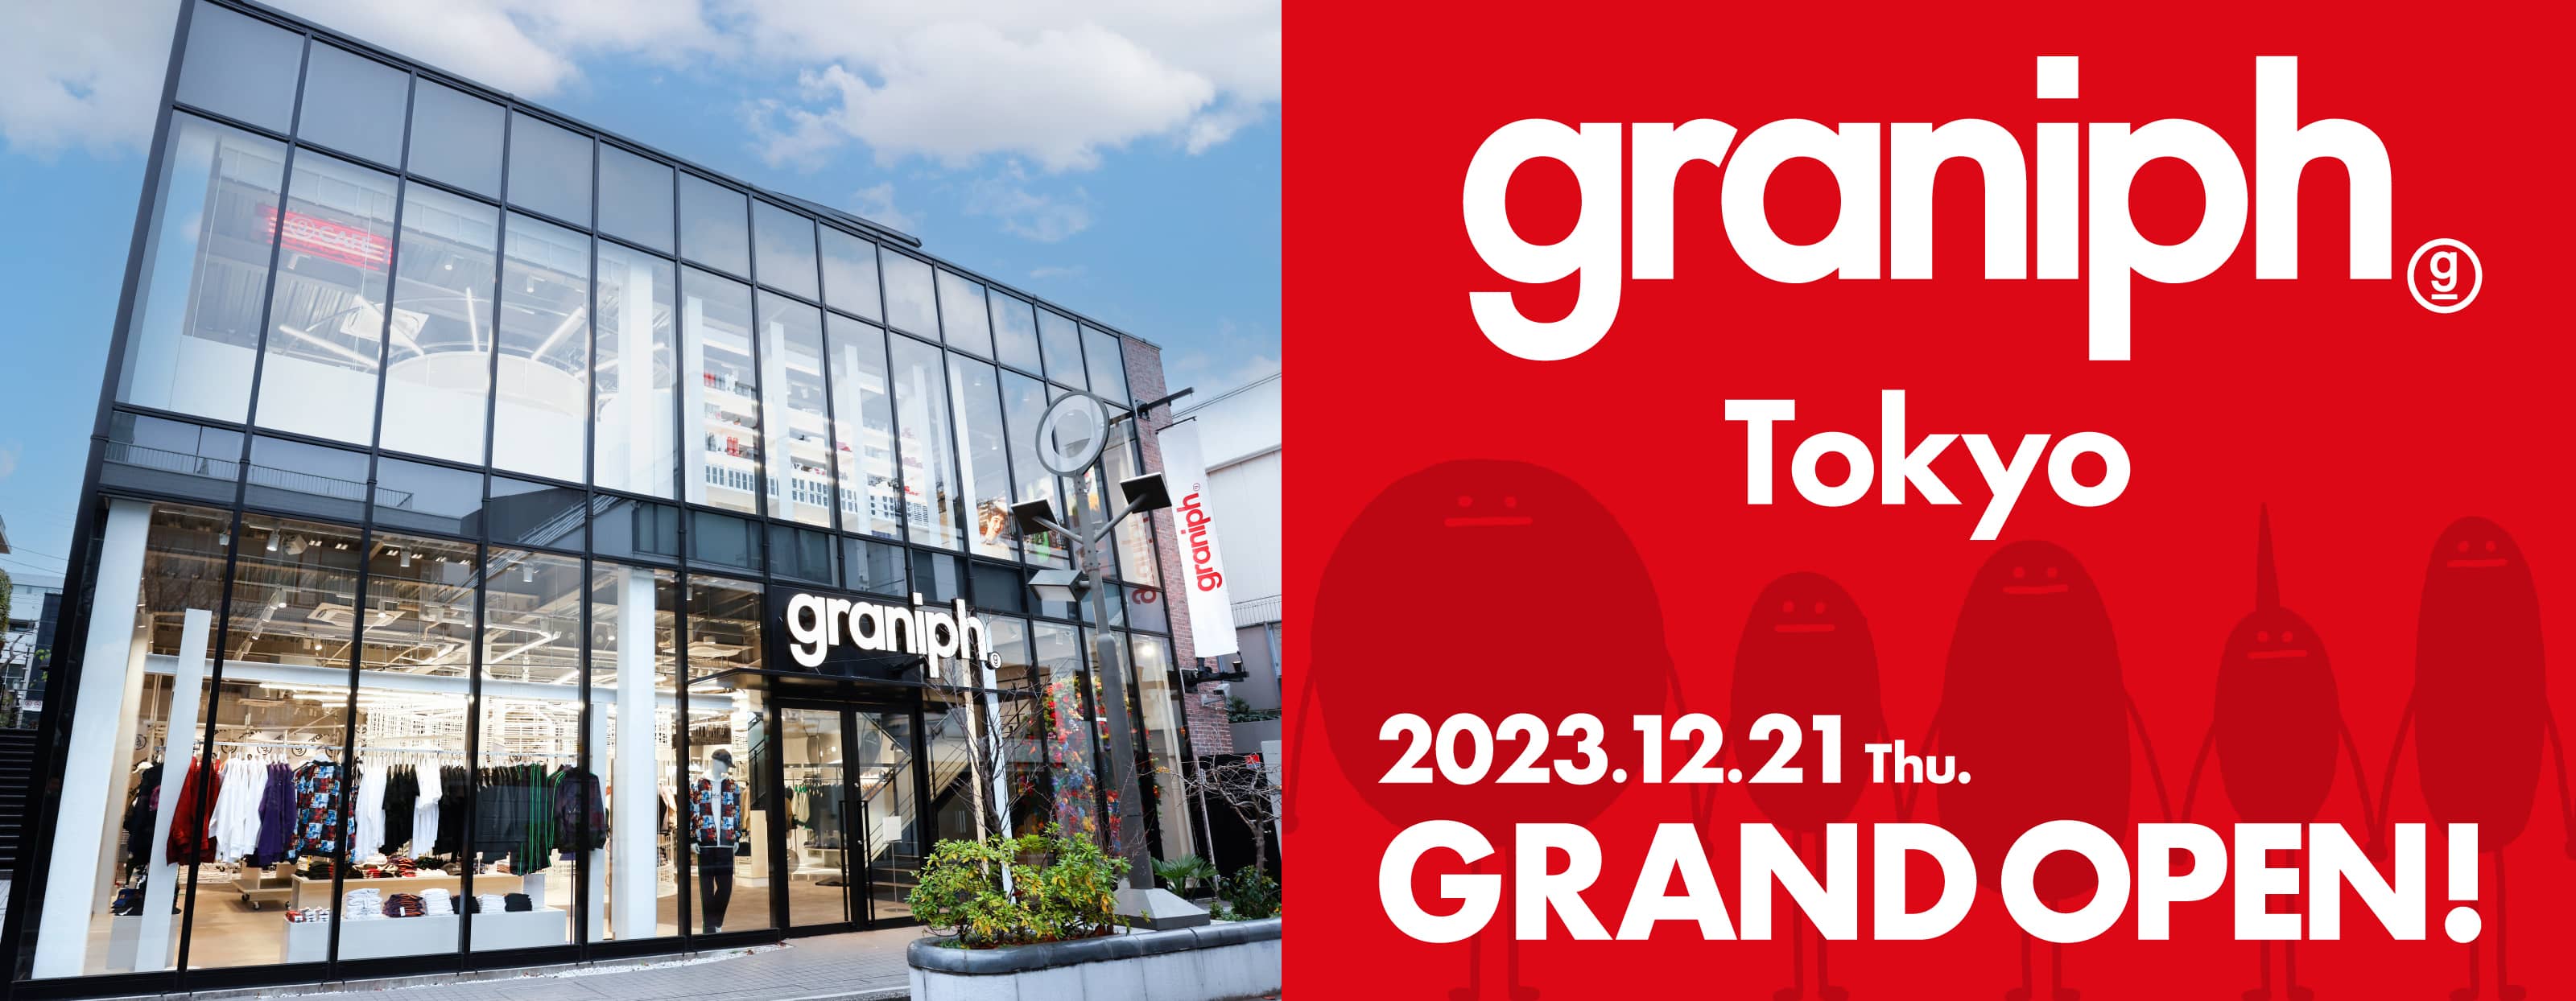 graniph Tokyo 2023.12.21Thursday GRAND OPEN!